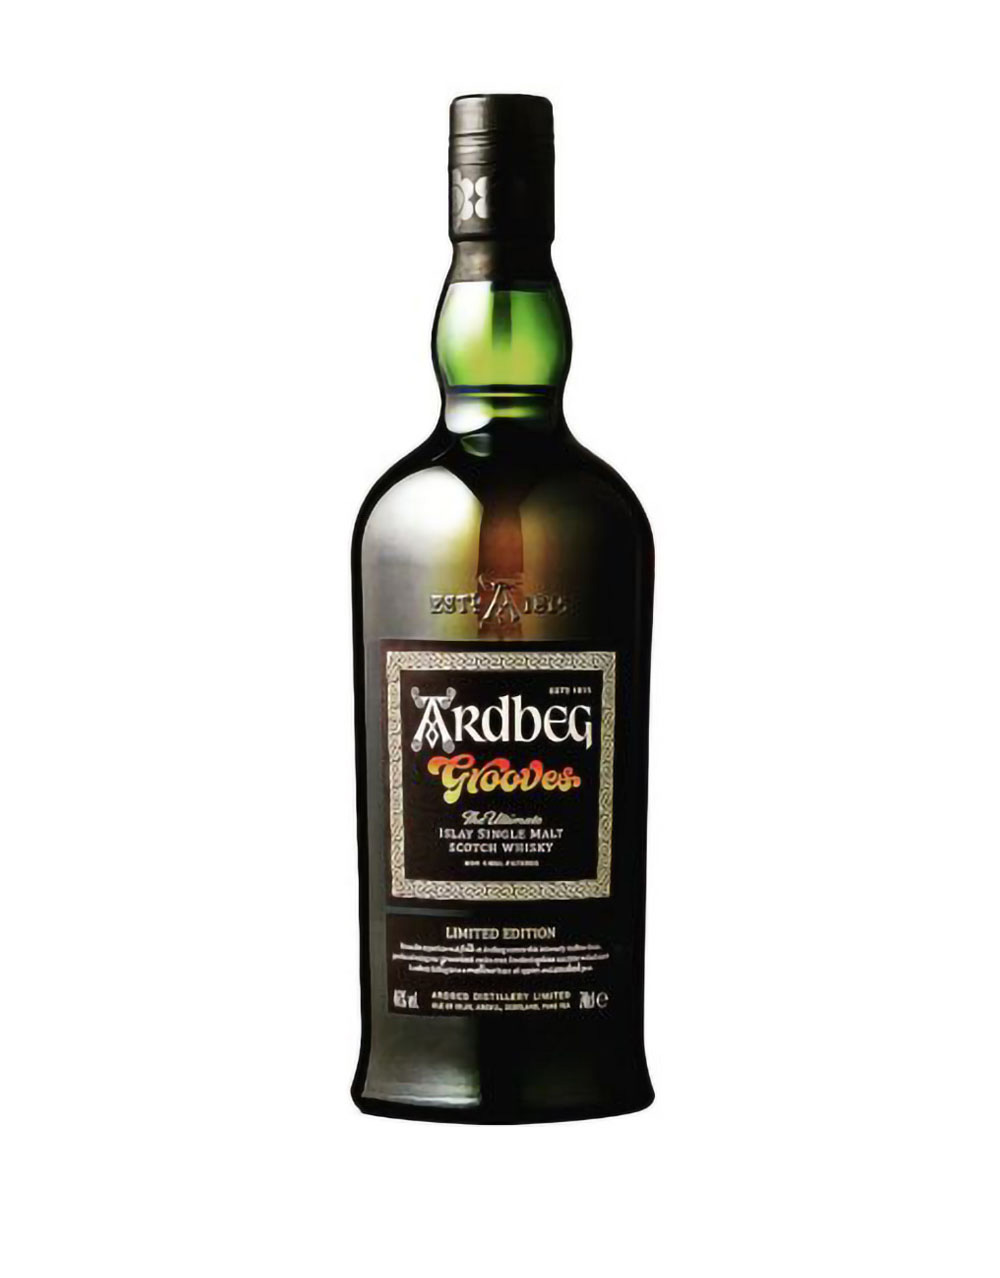 Ardbeg Grooves Single Malt Scotch Whiskey